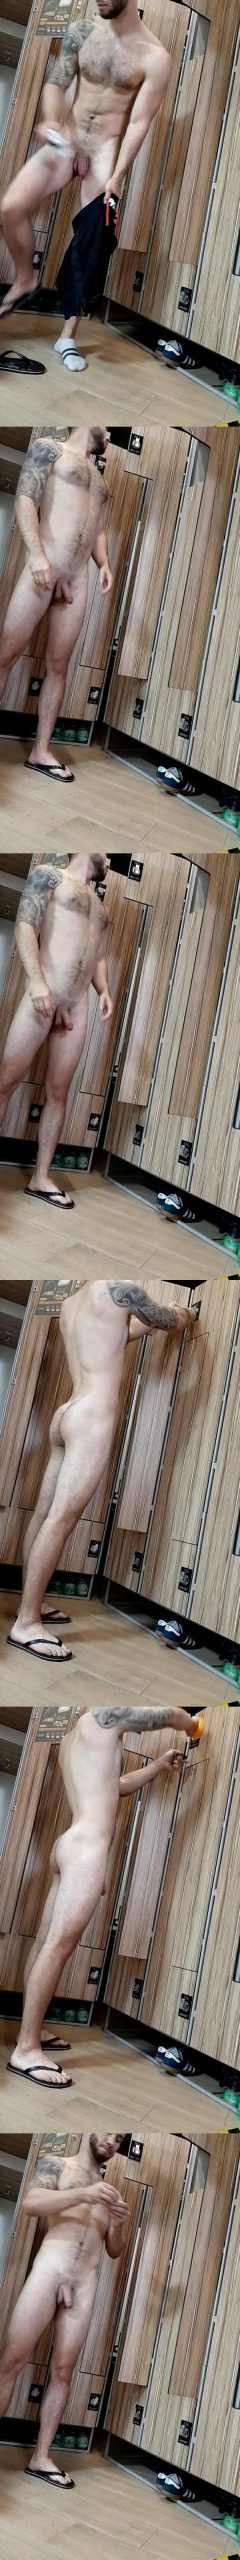 spy on hairy tattooed naked guy in locker room